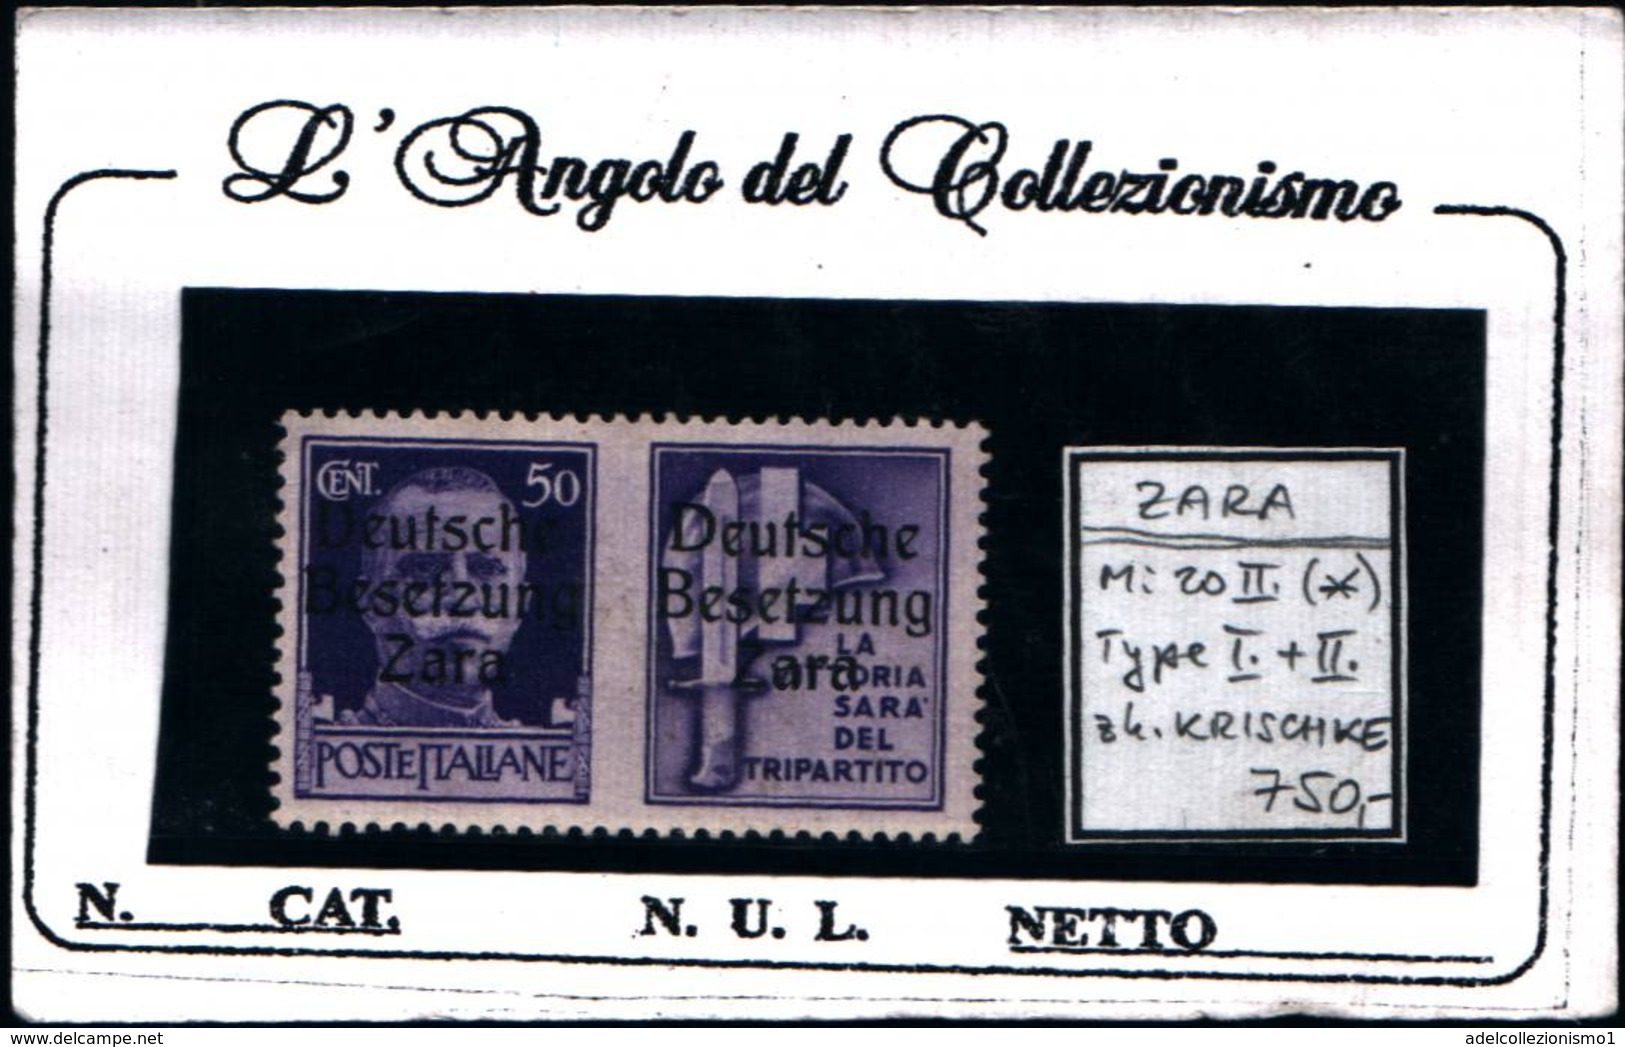 6941B) ITALIA- Zara, 50C. Serie Di Propaganda Sovrastampata - 9 Ottobre 1943-MI 20 II-TYPE I+ II -FIRMATO SENZA GOMMA - Occ. Allemande: Zara